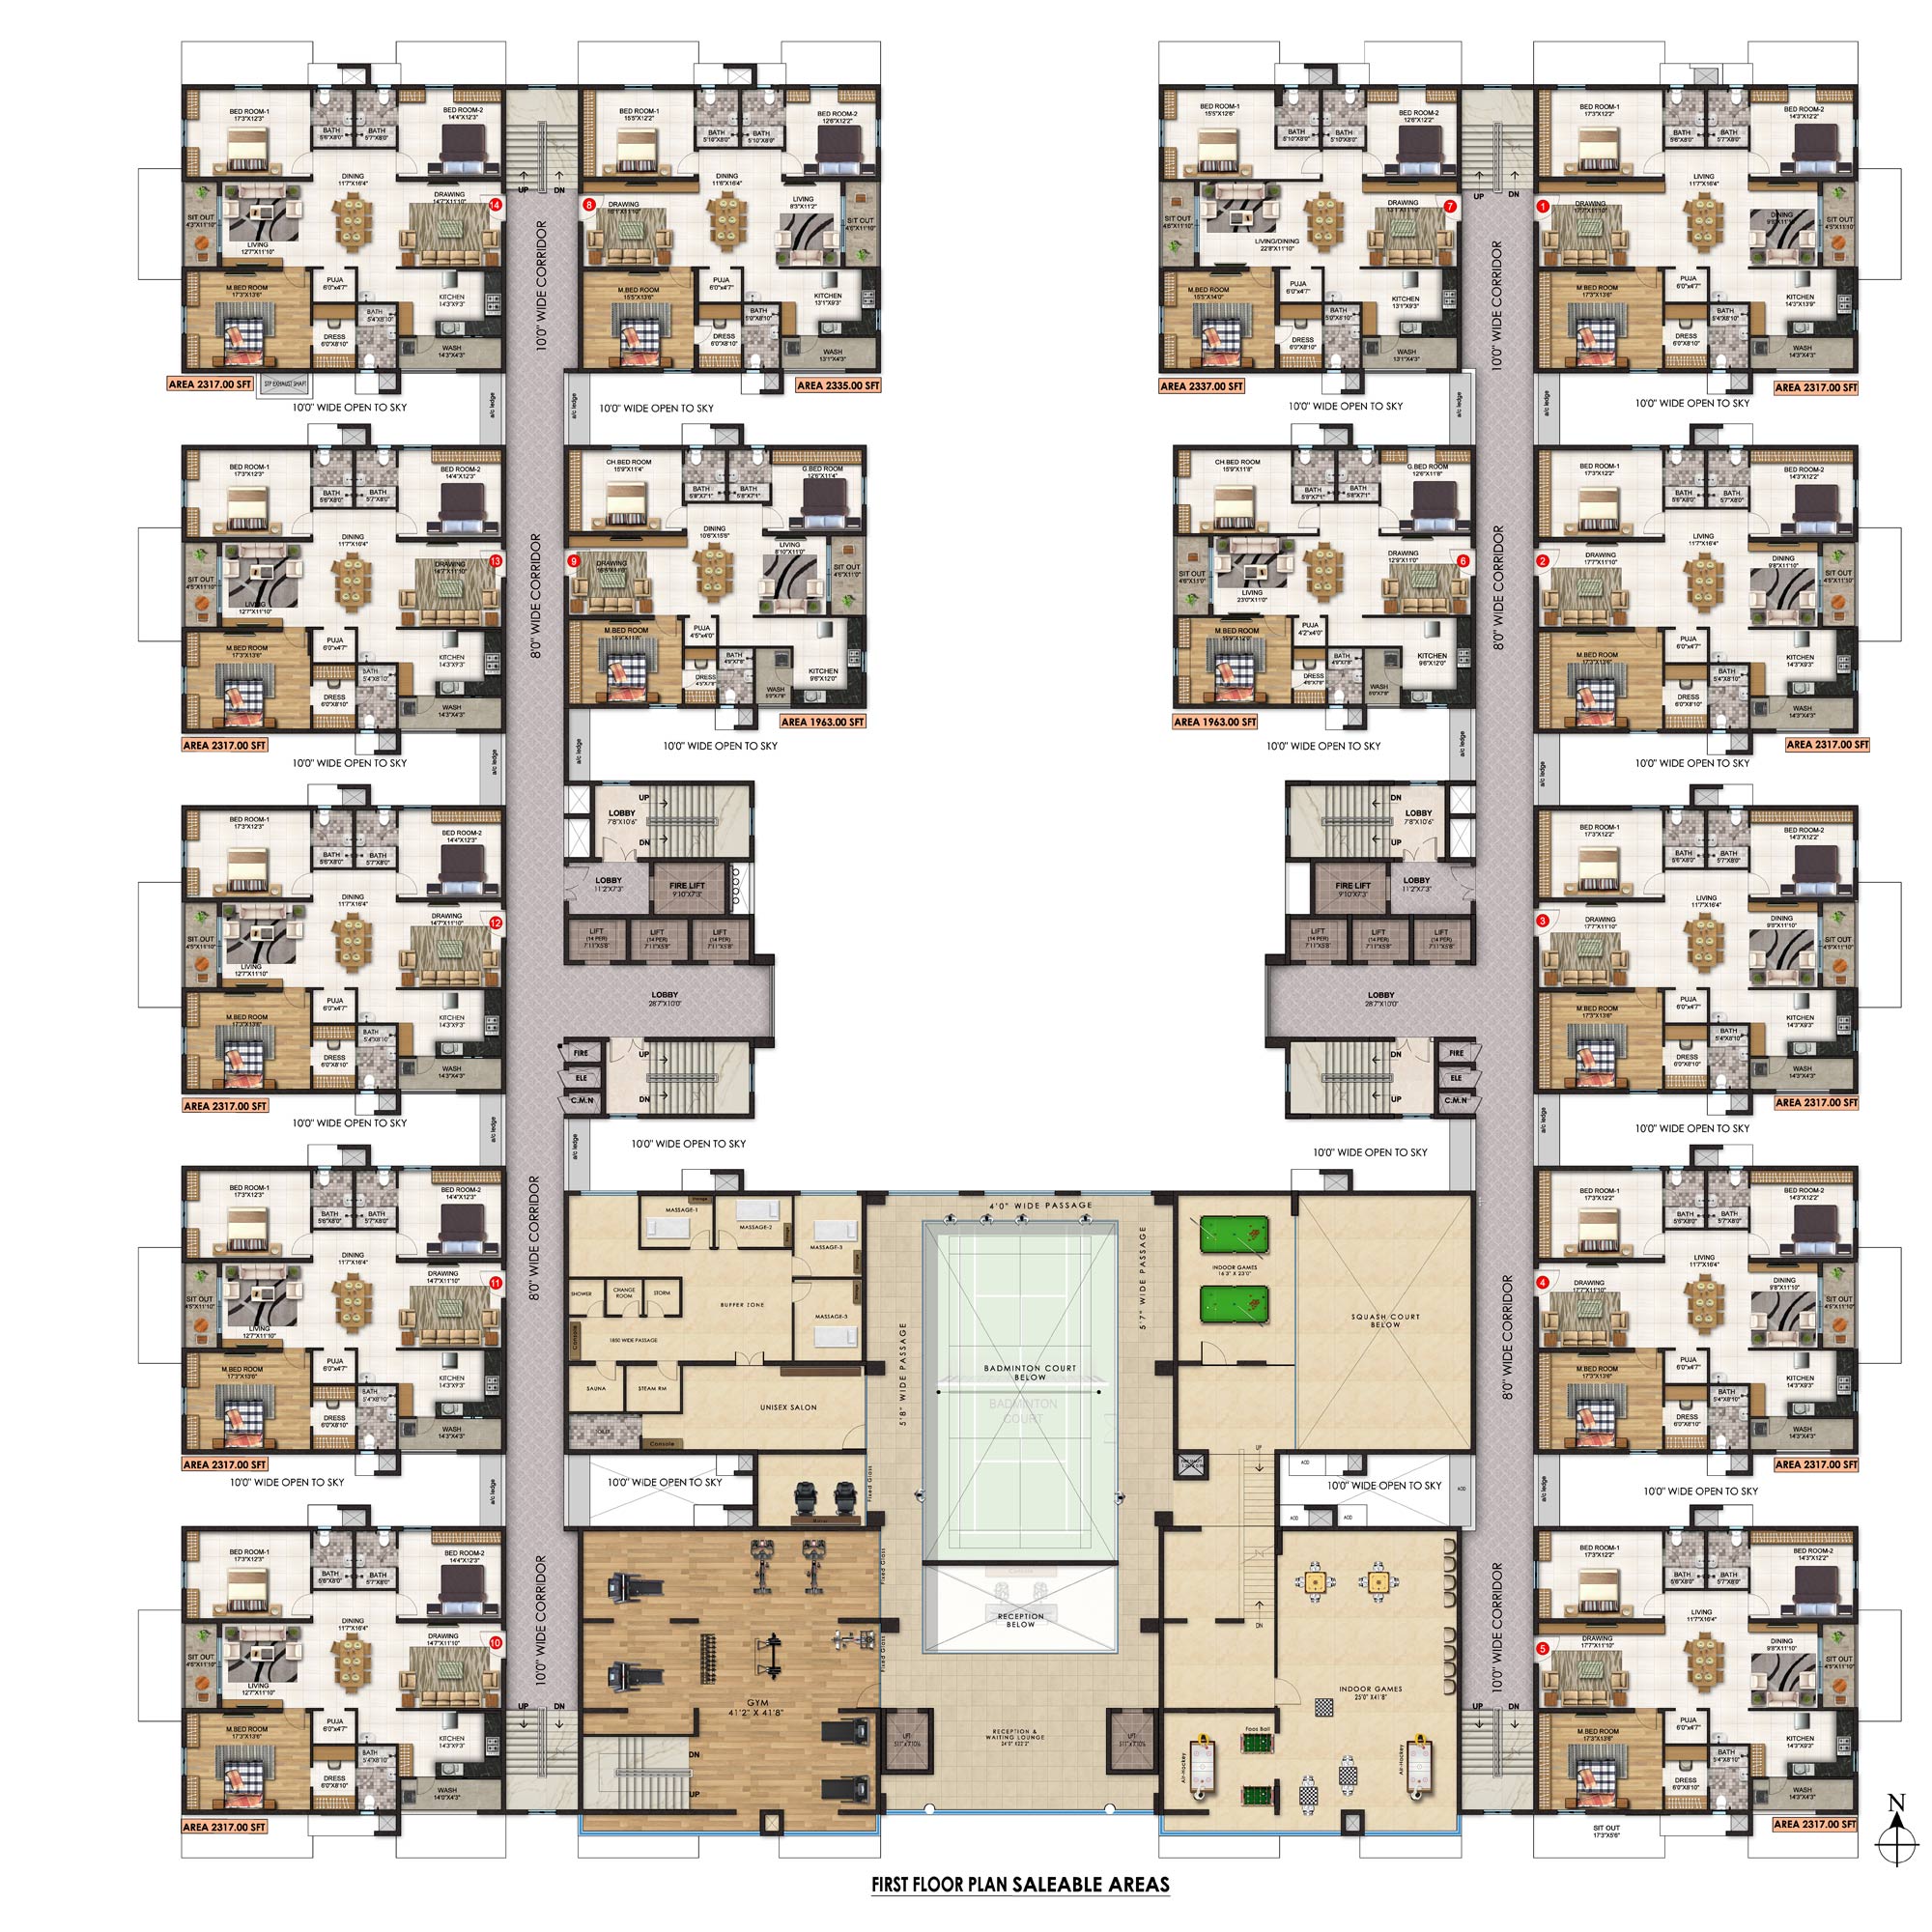 942 sq ft 2 BHK Floor Plan Image - Prapti Home Estella Available for sale 